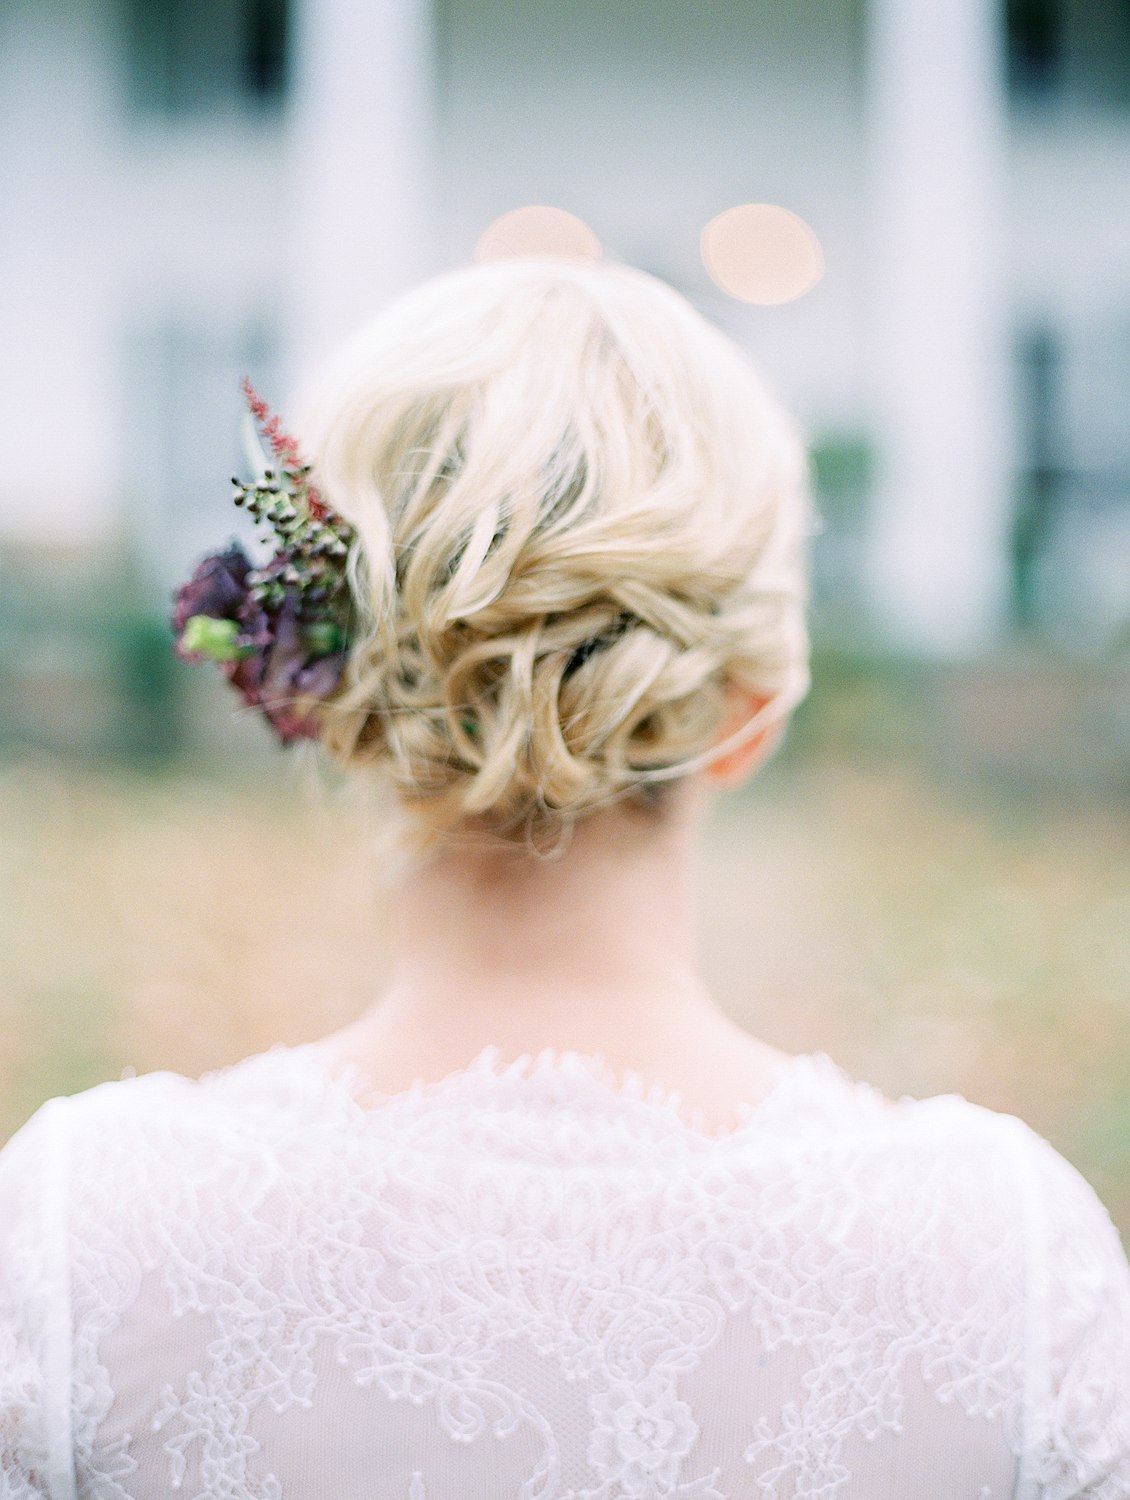 Knoxville Wedding Inspiration | Juicebeats Photography